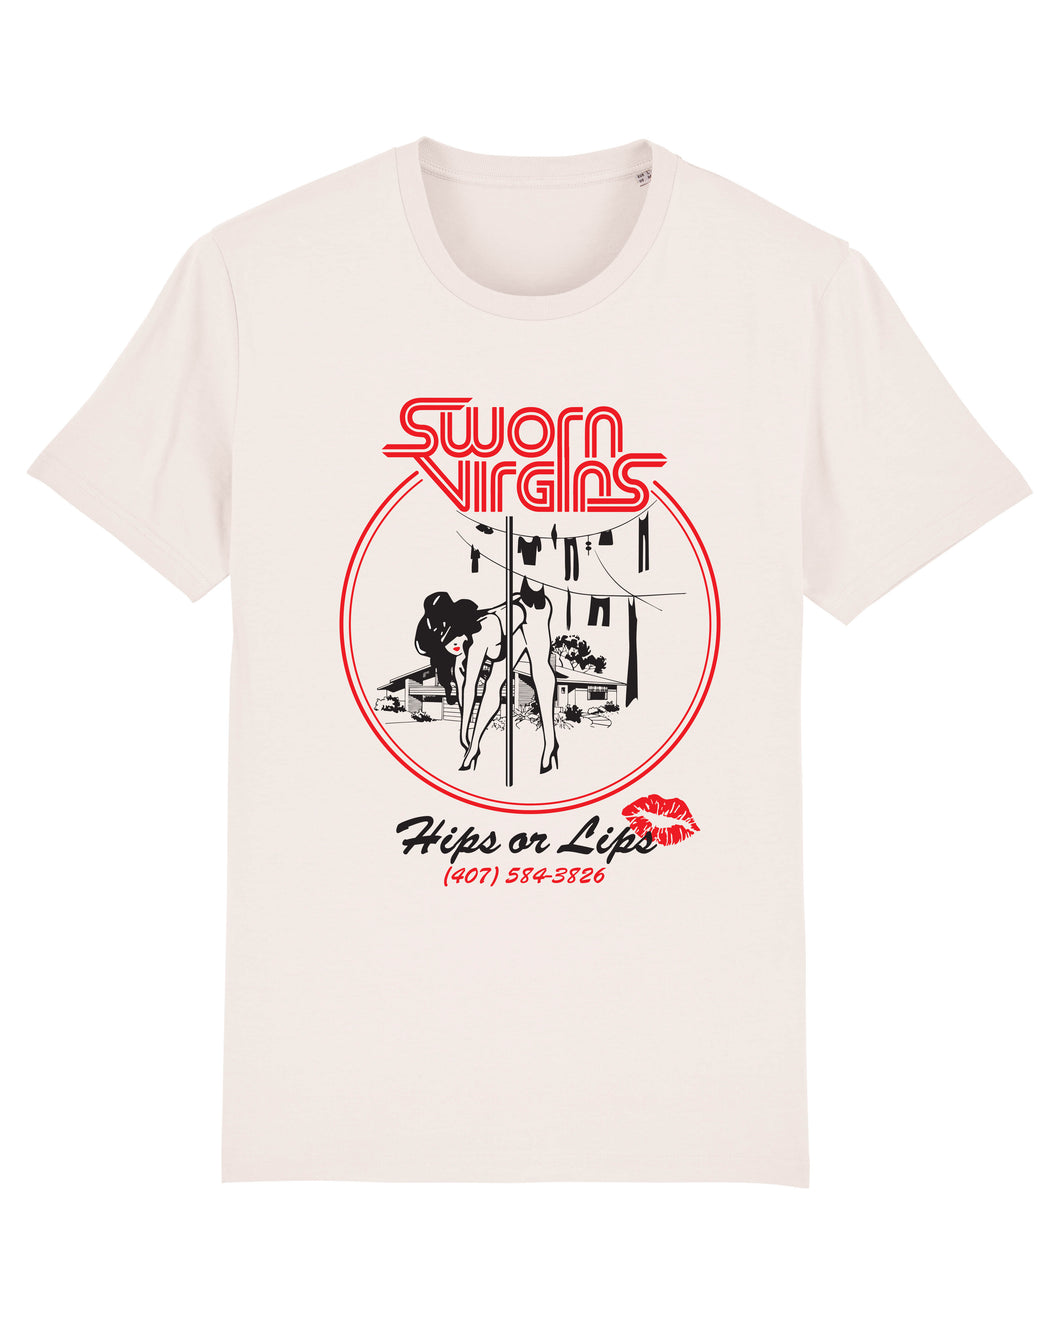 Sworn Virgins Hips or Lips Limited Edition T-Shirts designed by Daniel Lamont Jackson